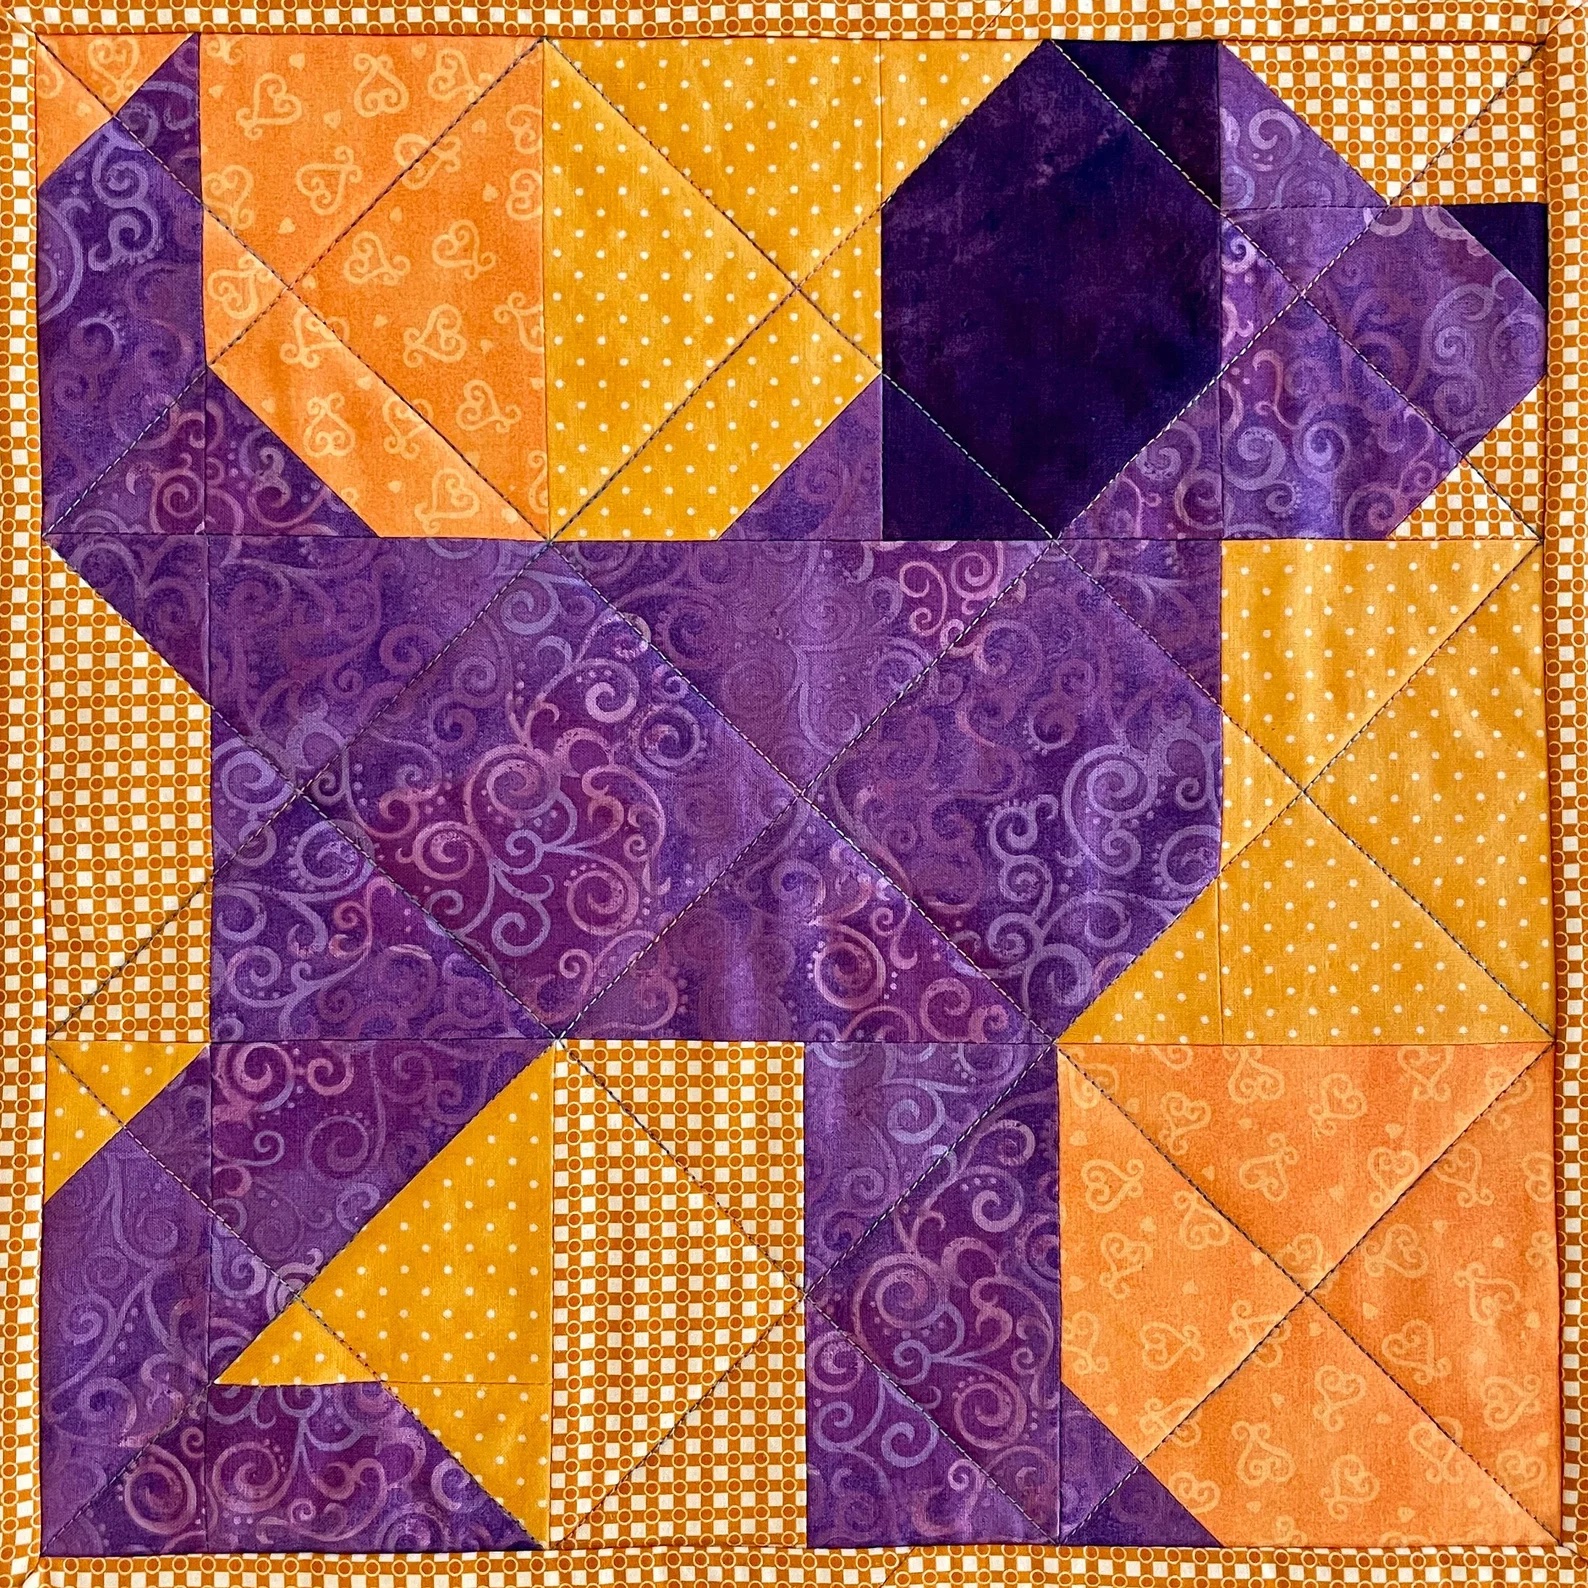 puppy 9-patch block dog quilt patterns 